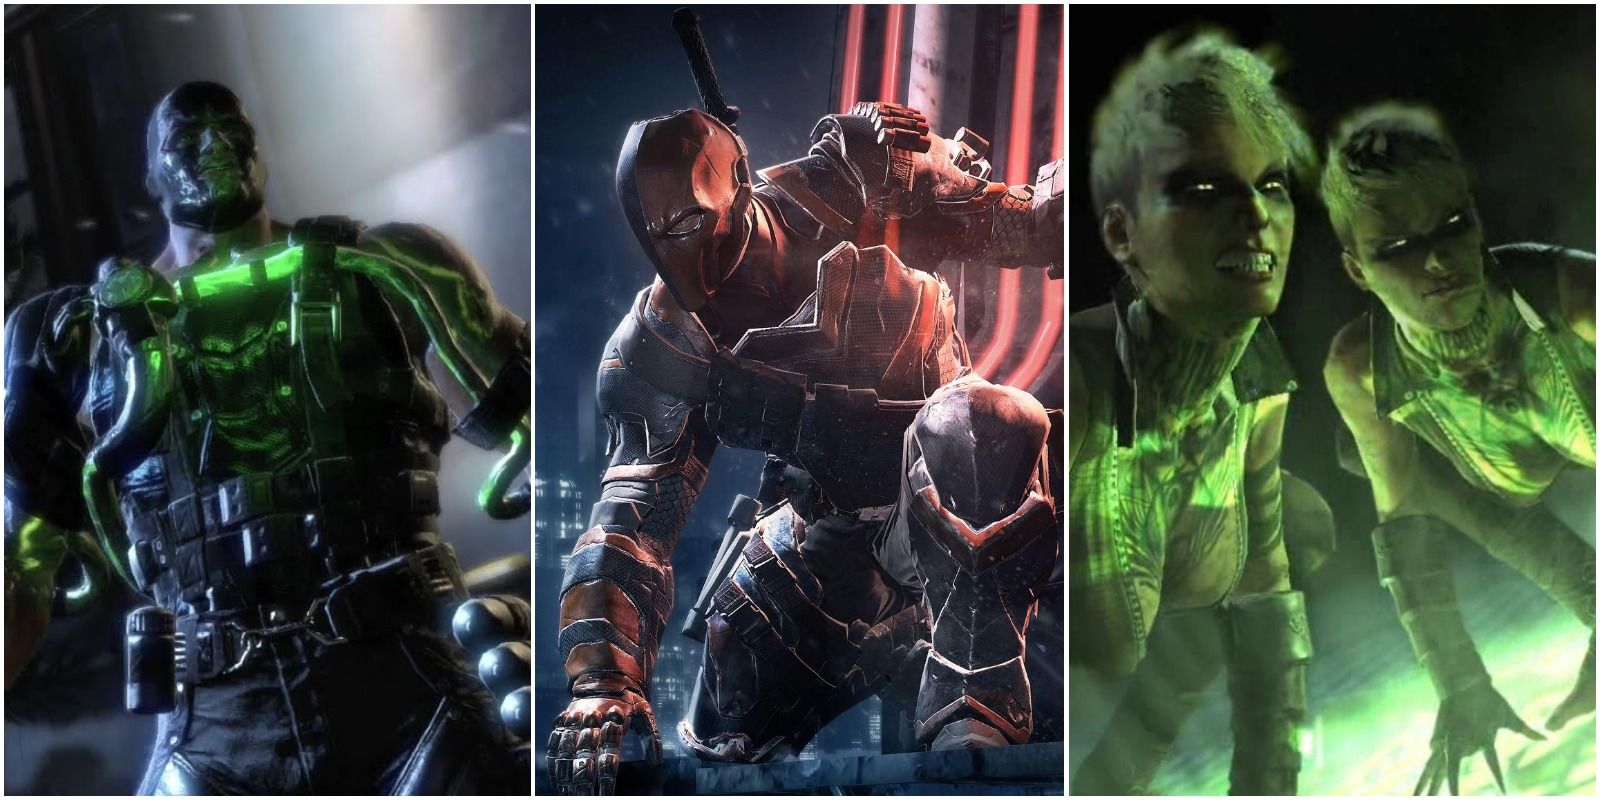 Bane, Deathstroke, and Copperhead as boss fights in Arkham Origins